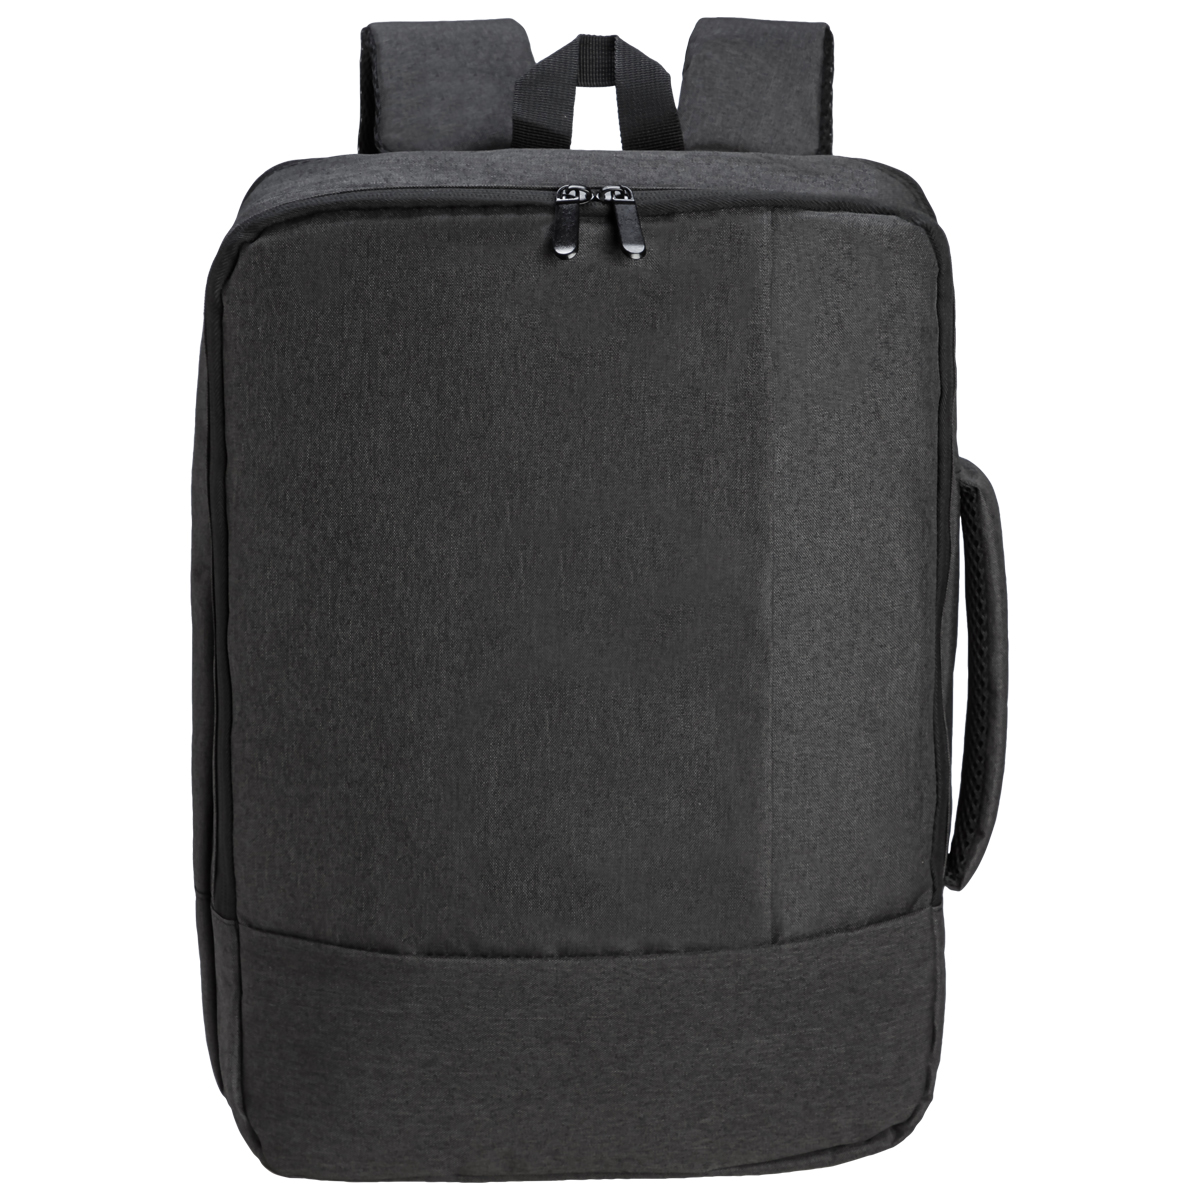 Business Smart Laptop Bag Product Image